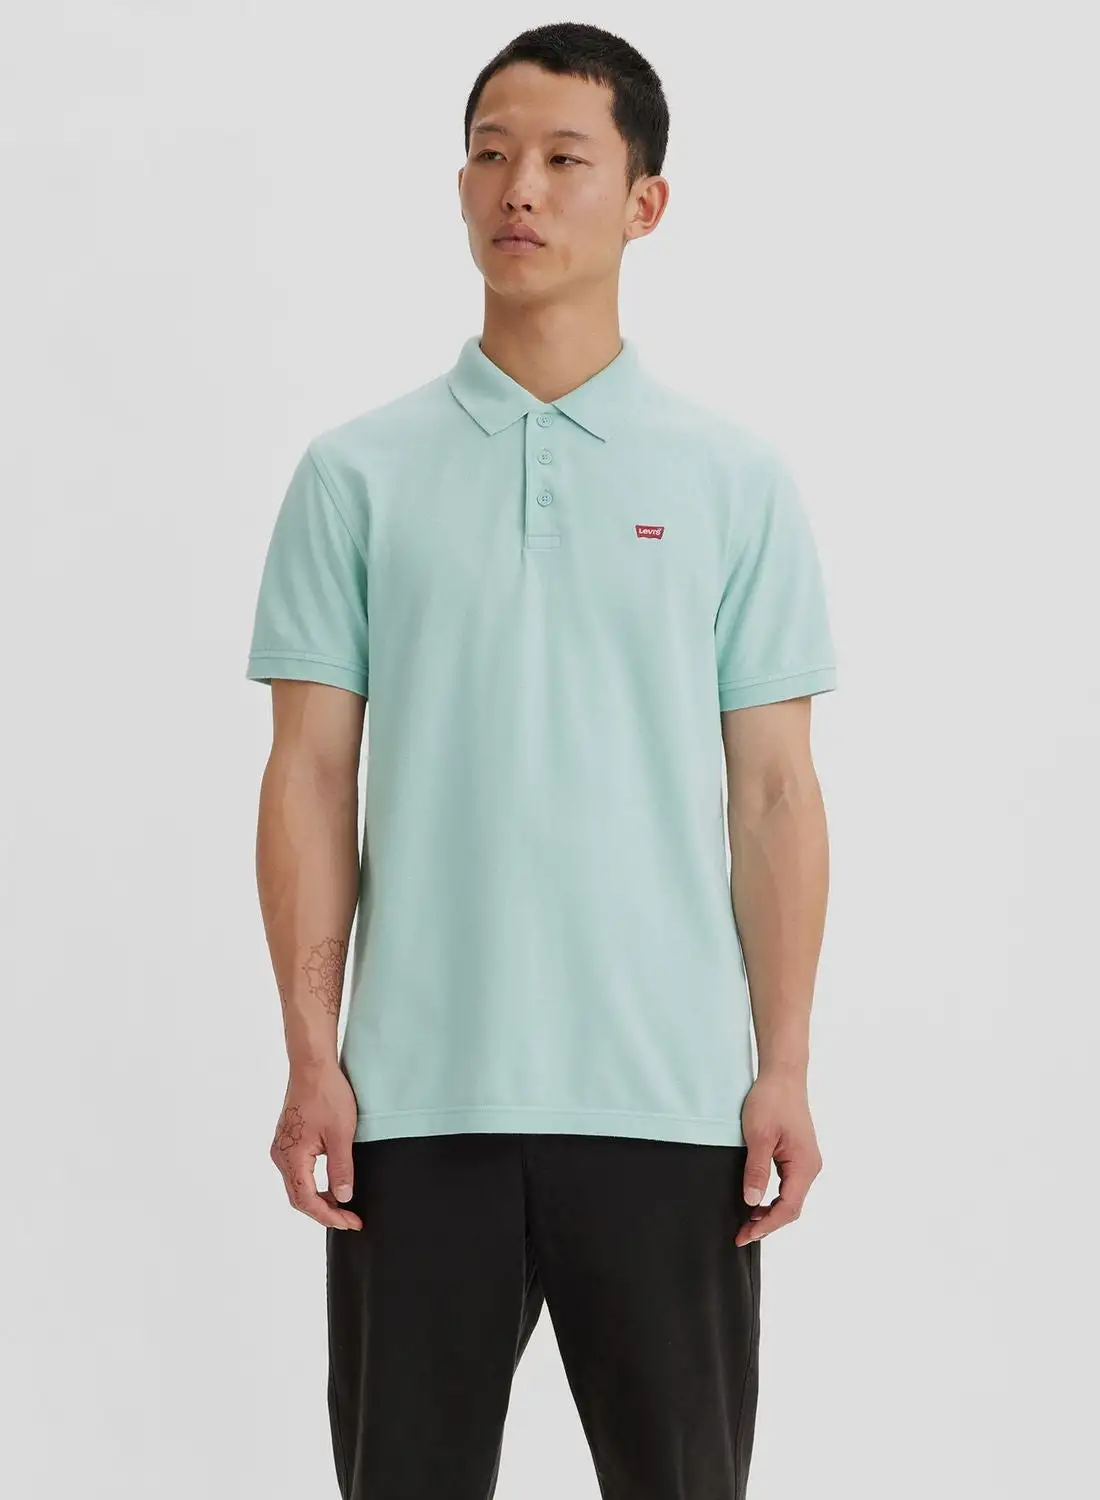 Levi's Essential Polo T-Shirt